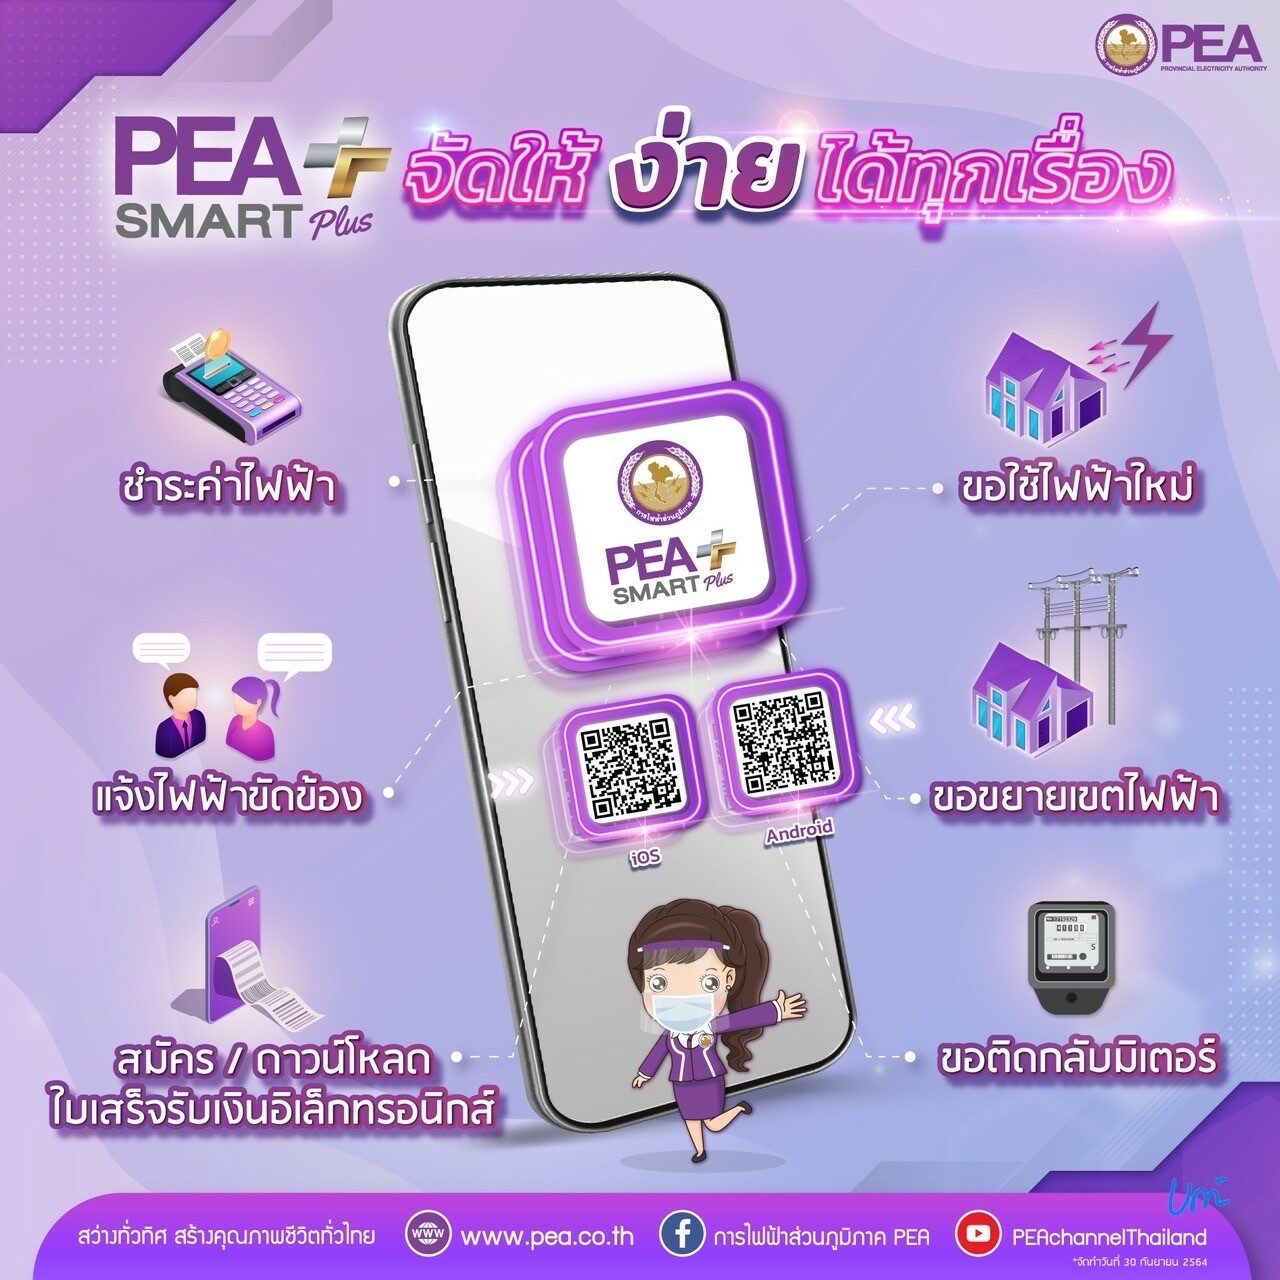 Pea แนะนำผู้ใช้ไฟฟ้าใช้บริการของ Pea ทาง Online ผ่านแอปพลิเคชัน Pea Smart  Plus